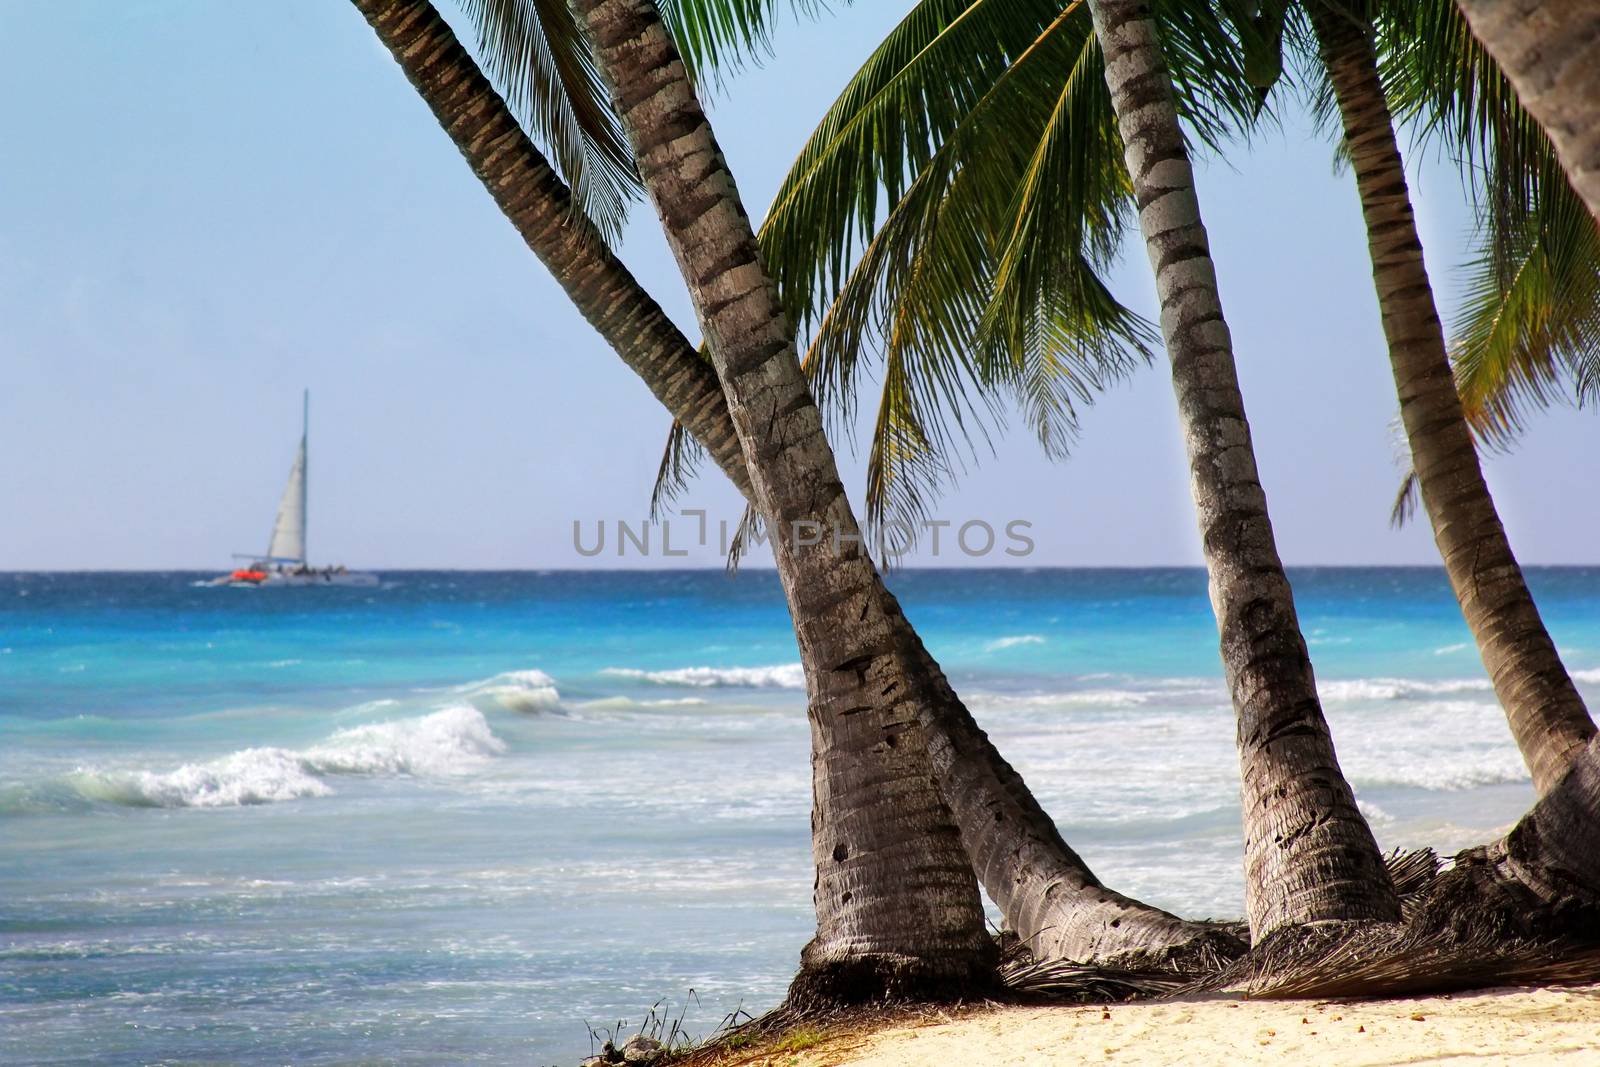 Saona island beach. Dominican Republic by friday